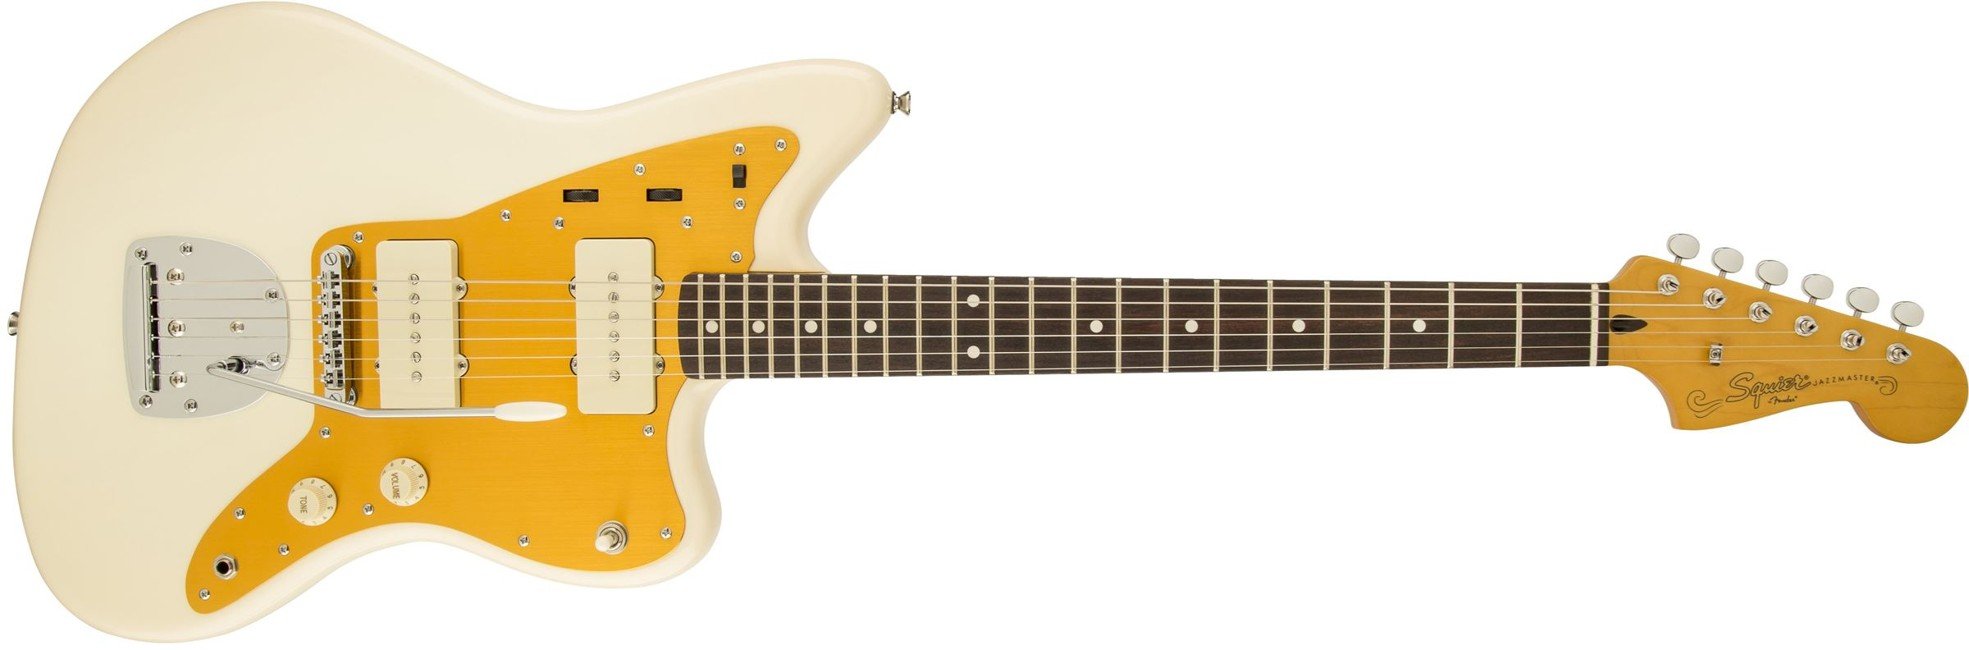 Squier By Fender - J Mascis Signature Jazzmaster - Elektrisk Guitar (Vintage White)